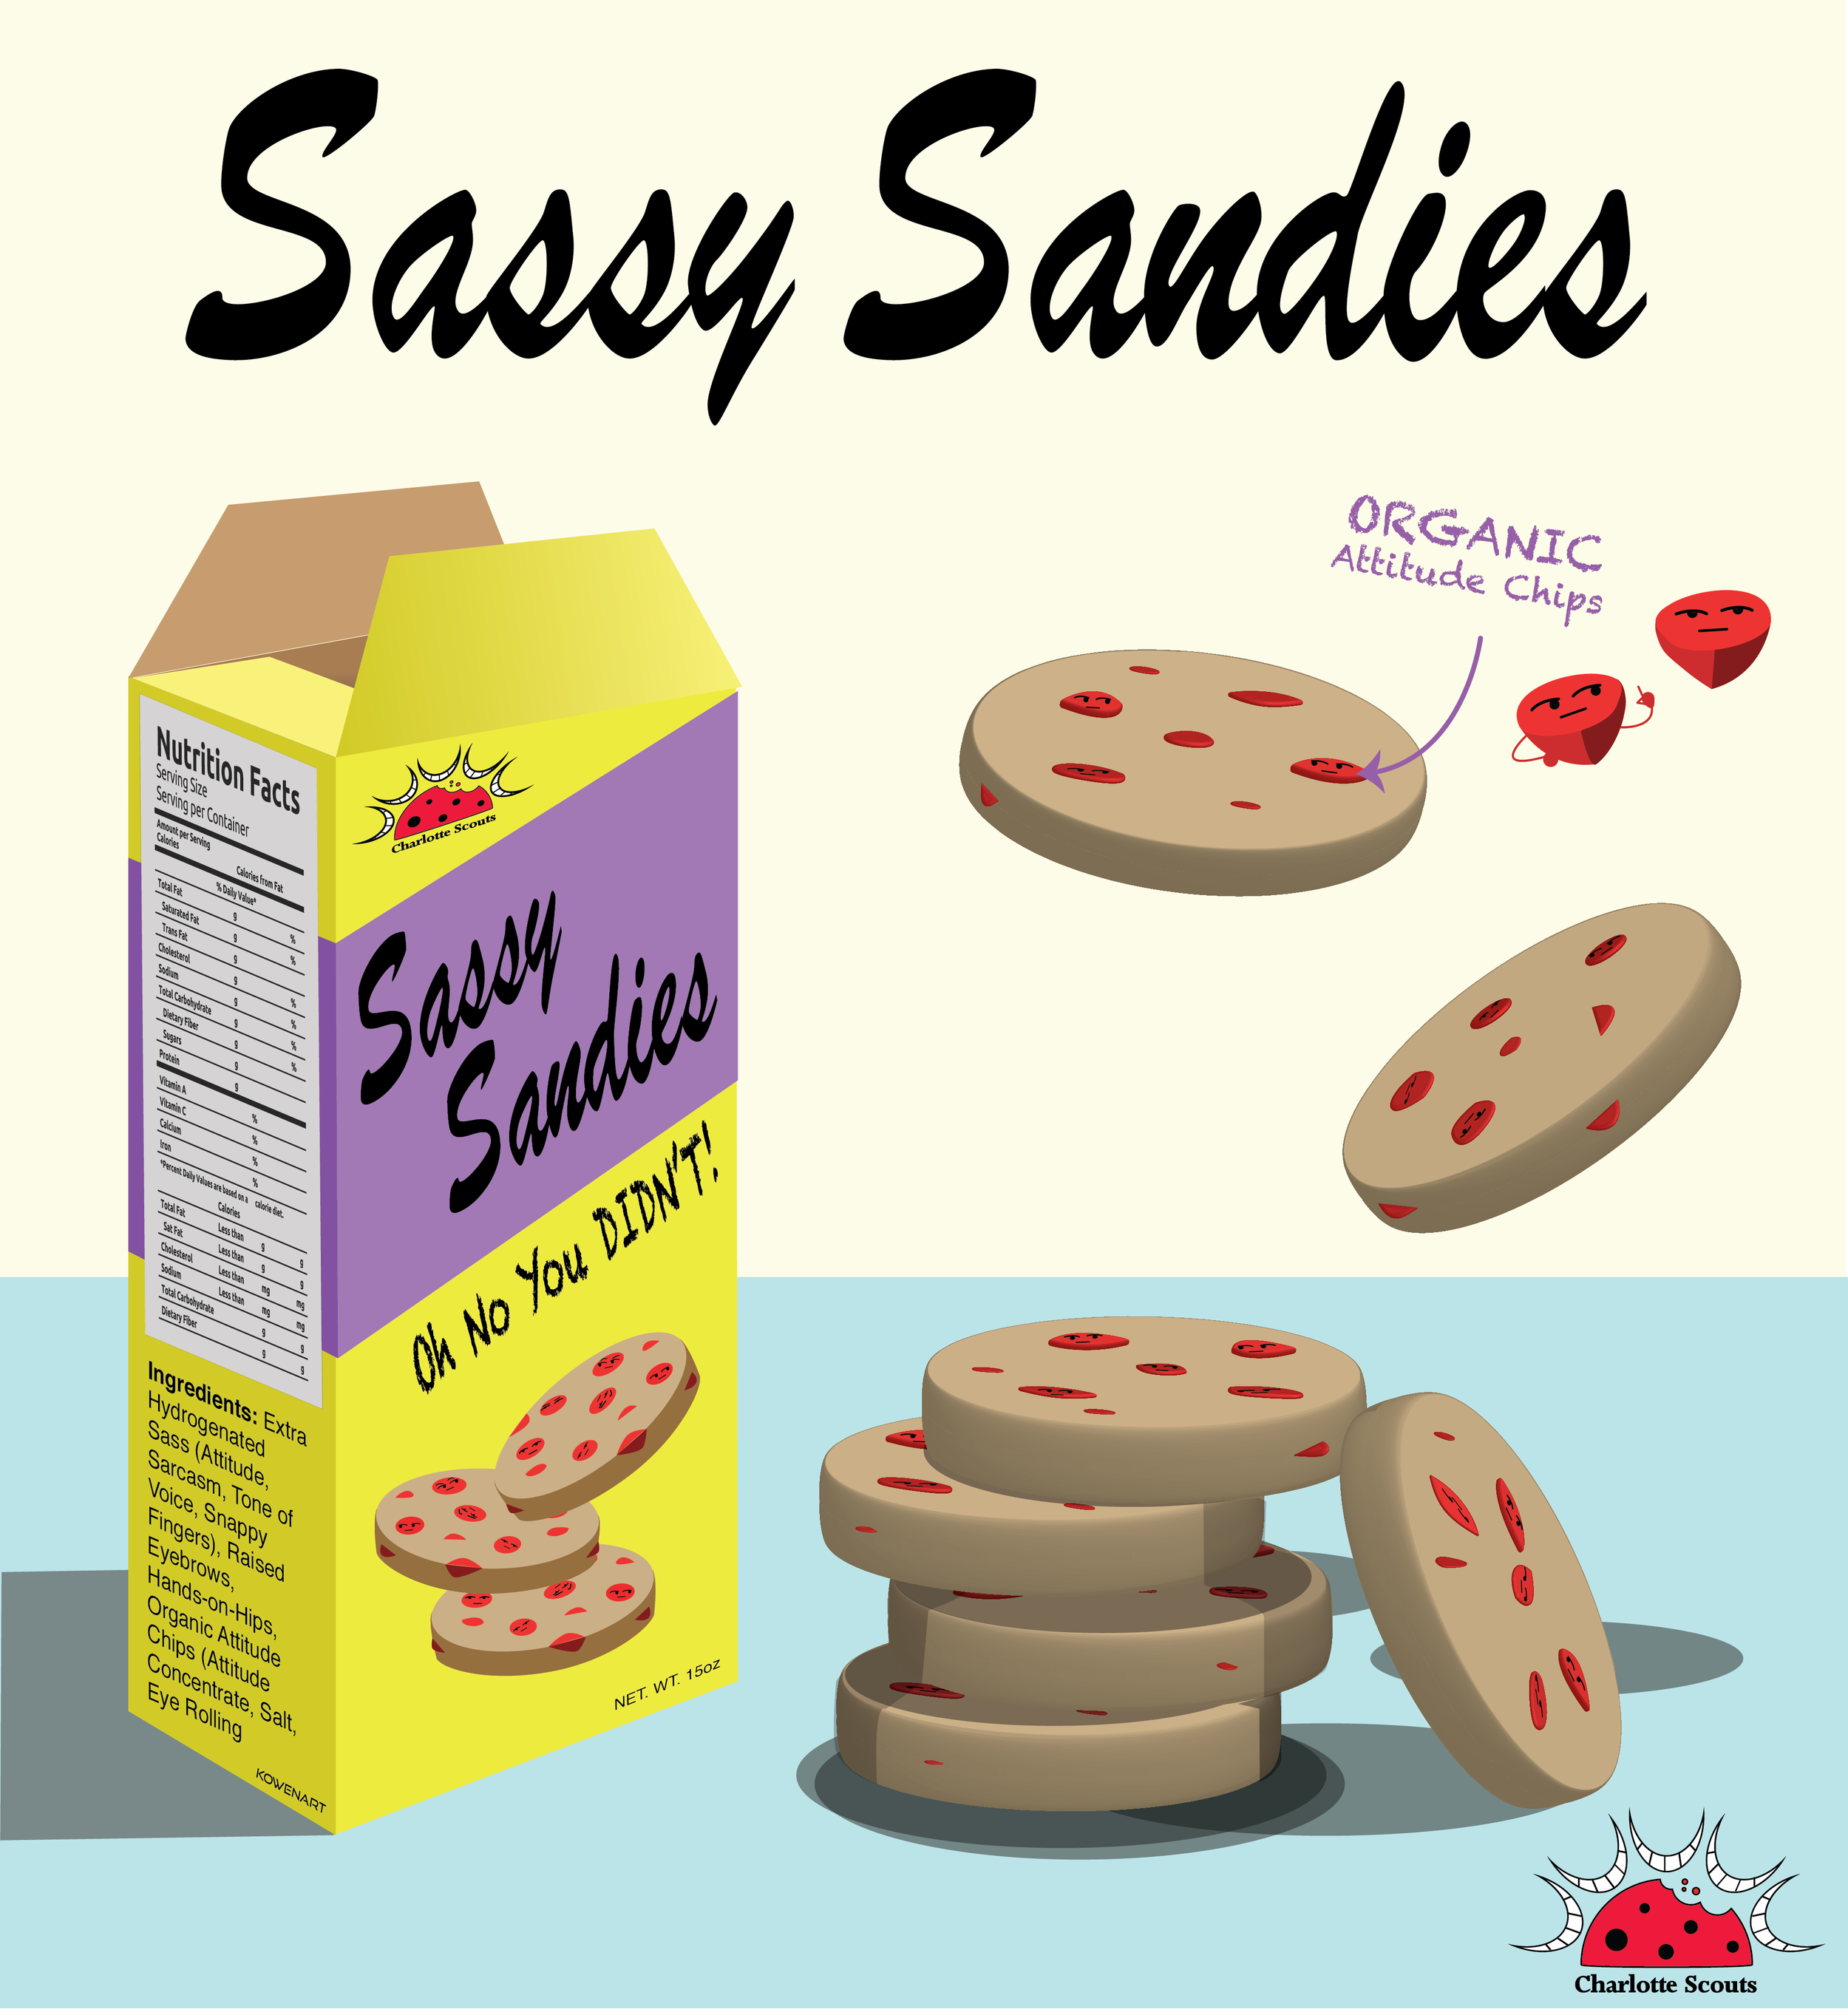 Sassy Sandies rev-01.png